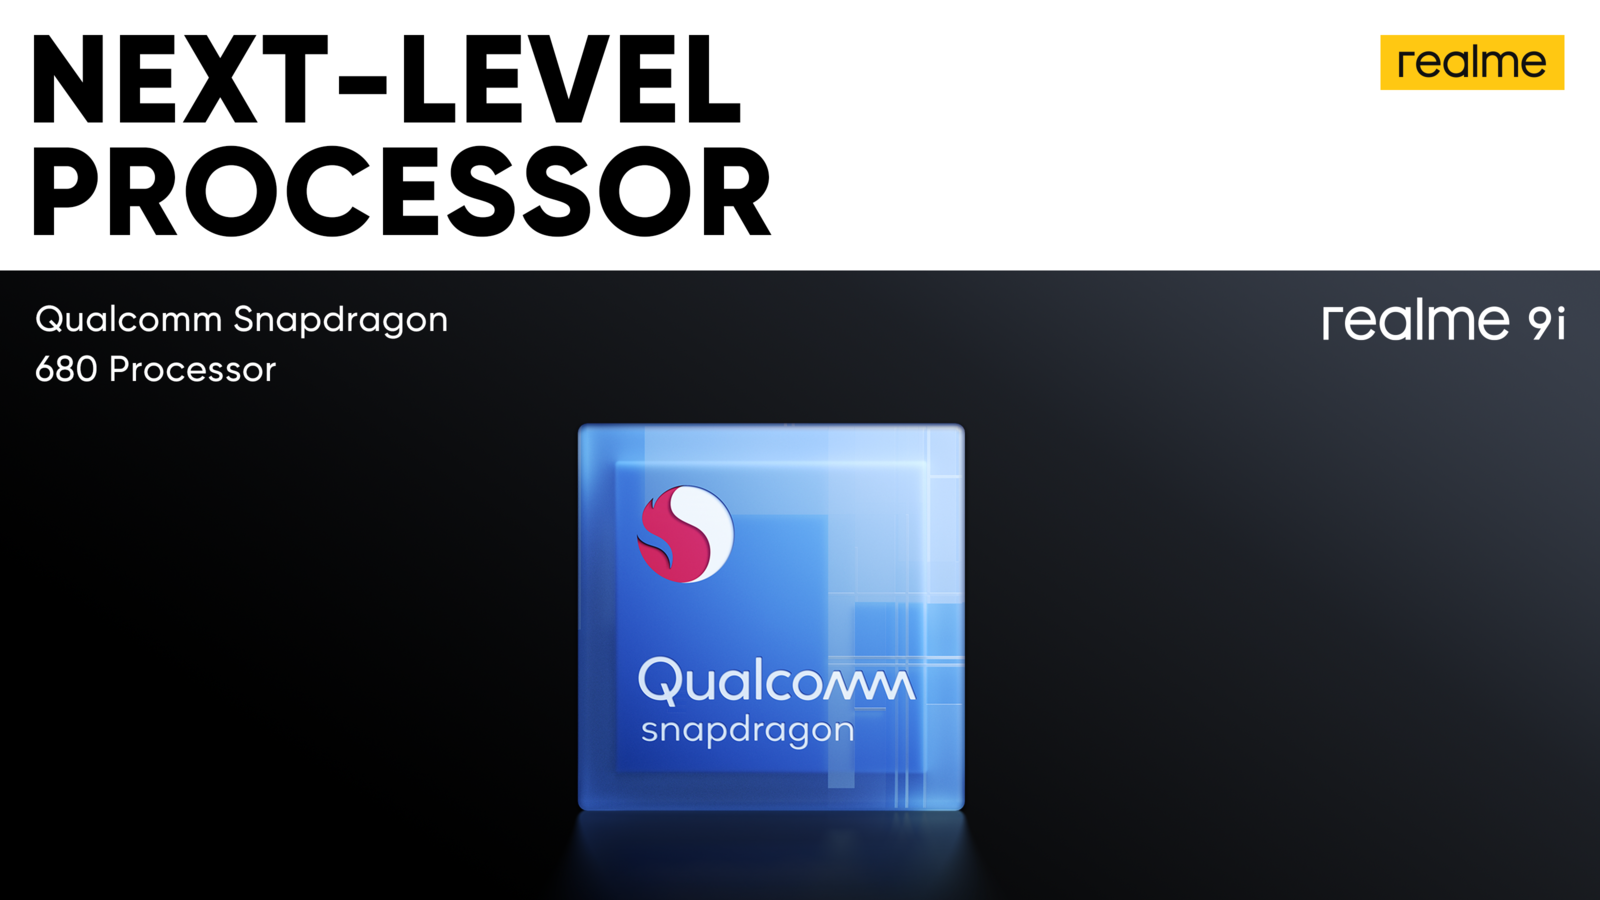 Qualcomm Snapdragon 680 Processor | Realme | เตรียมพบ realme 9i มาพร้อมกับชิปเซ็ตใหม่ล่าสุด Snapdragon 680 เทคโนโลยี 6 นาโน เปิดตัววันที่ 11 มกราคมนี้